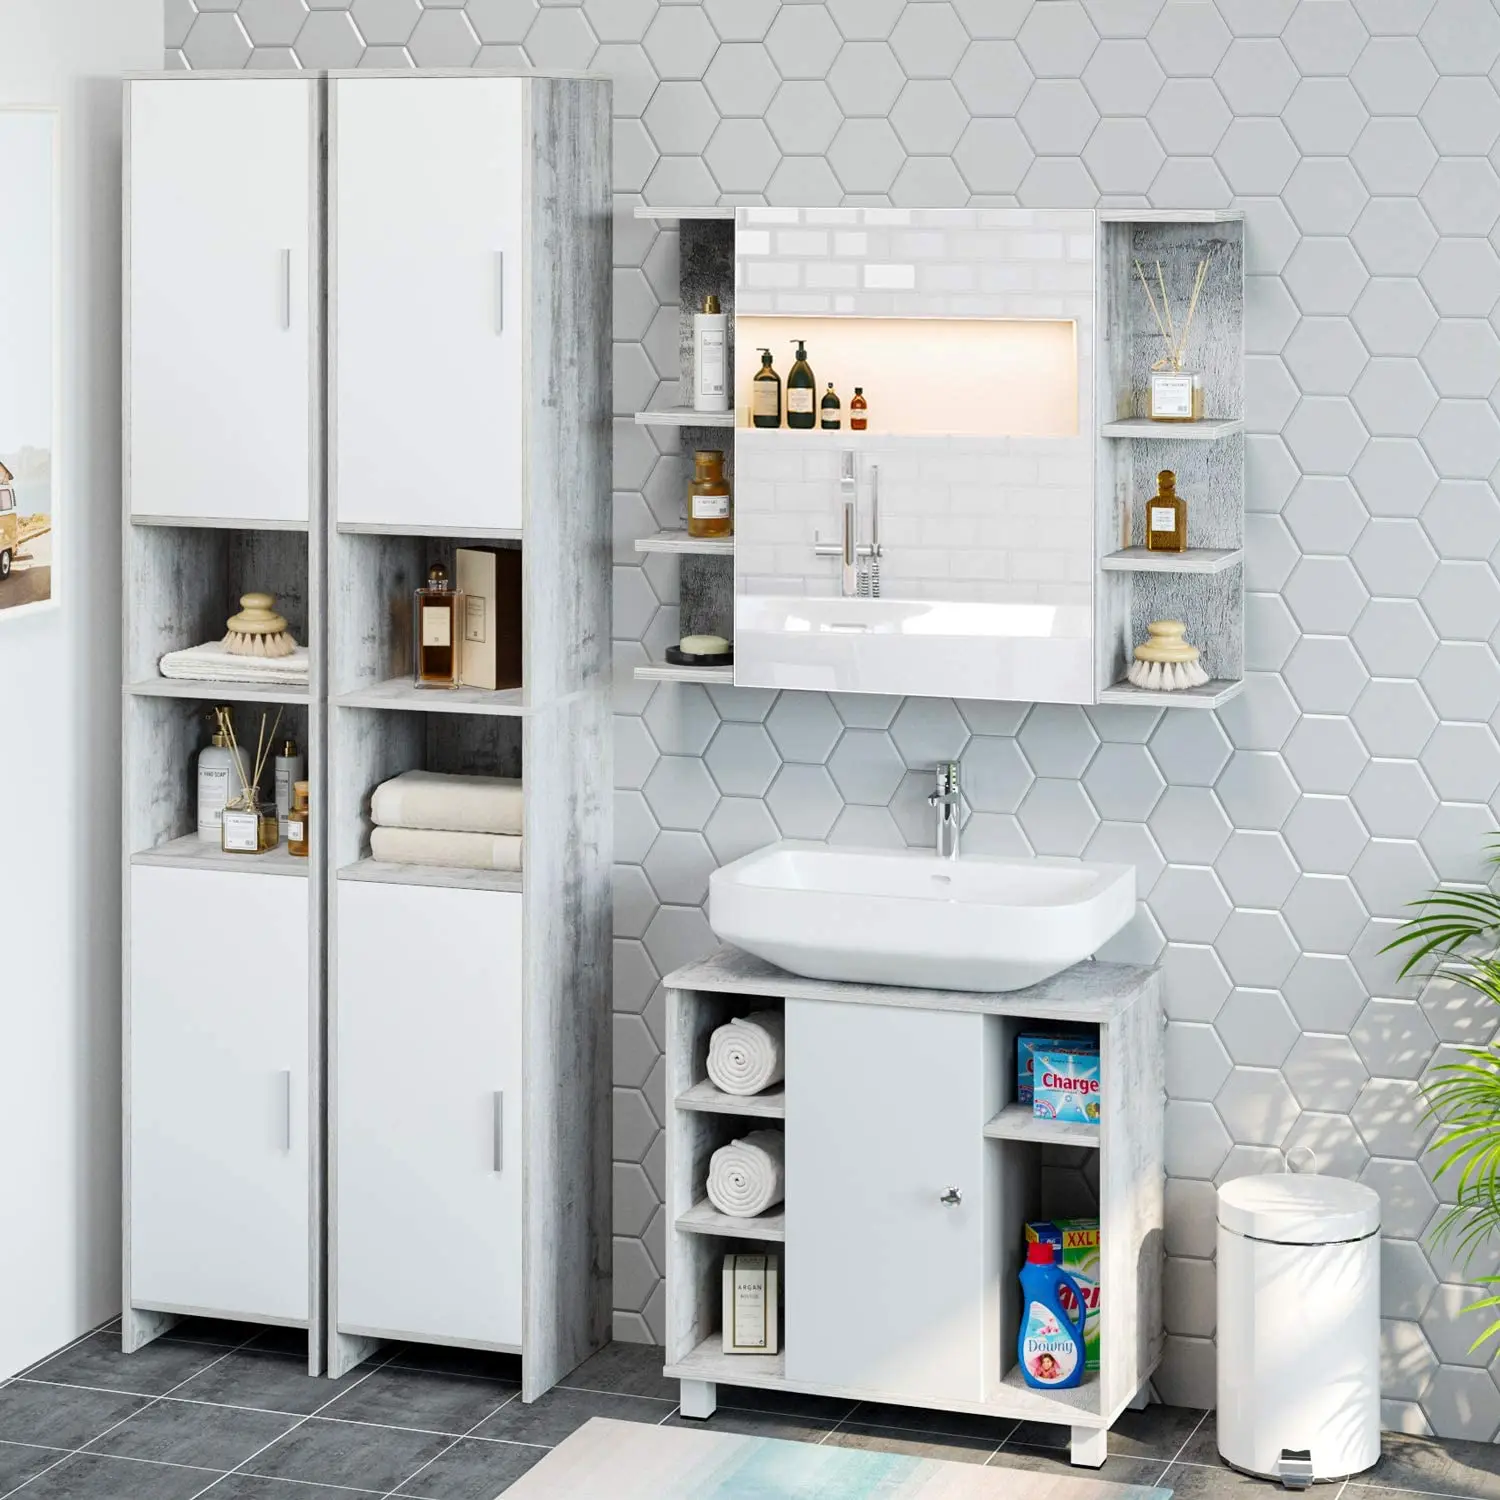 https://ae01.alicdn.com/kf/S03145db3c8894aa8b9f17079079c6bf9E/Homfa-Bathroom-Cabinet-with-5-Open-Shelves-and-Doors-Bathroom-Toilet-Moisture-proof-Furniture-Wood-Cupboard.jpg